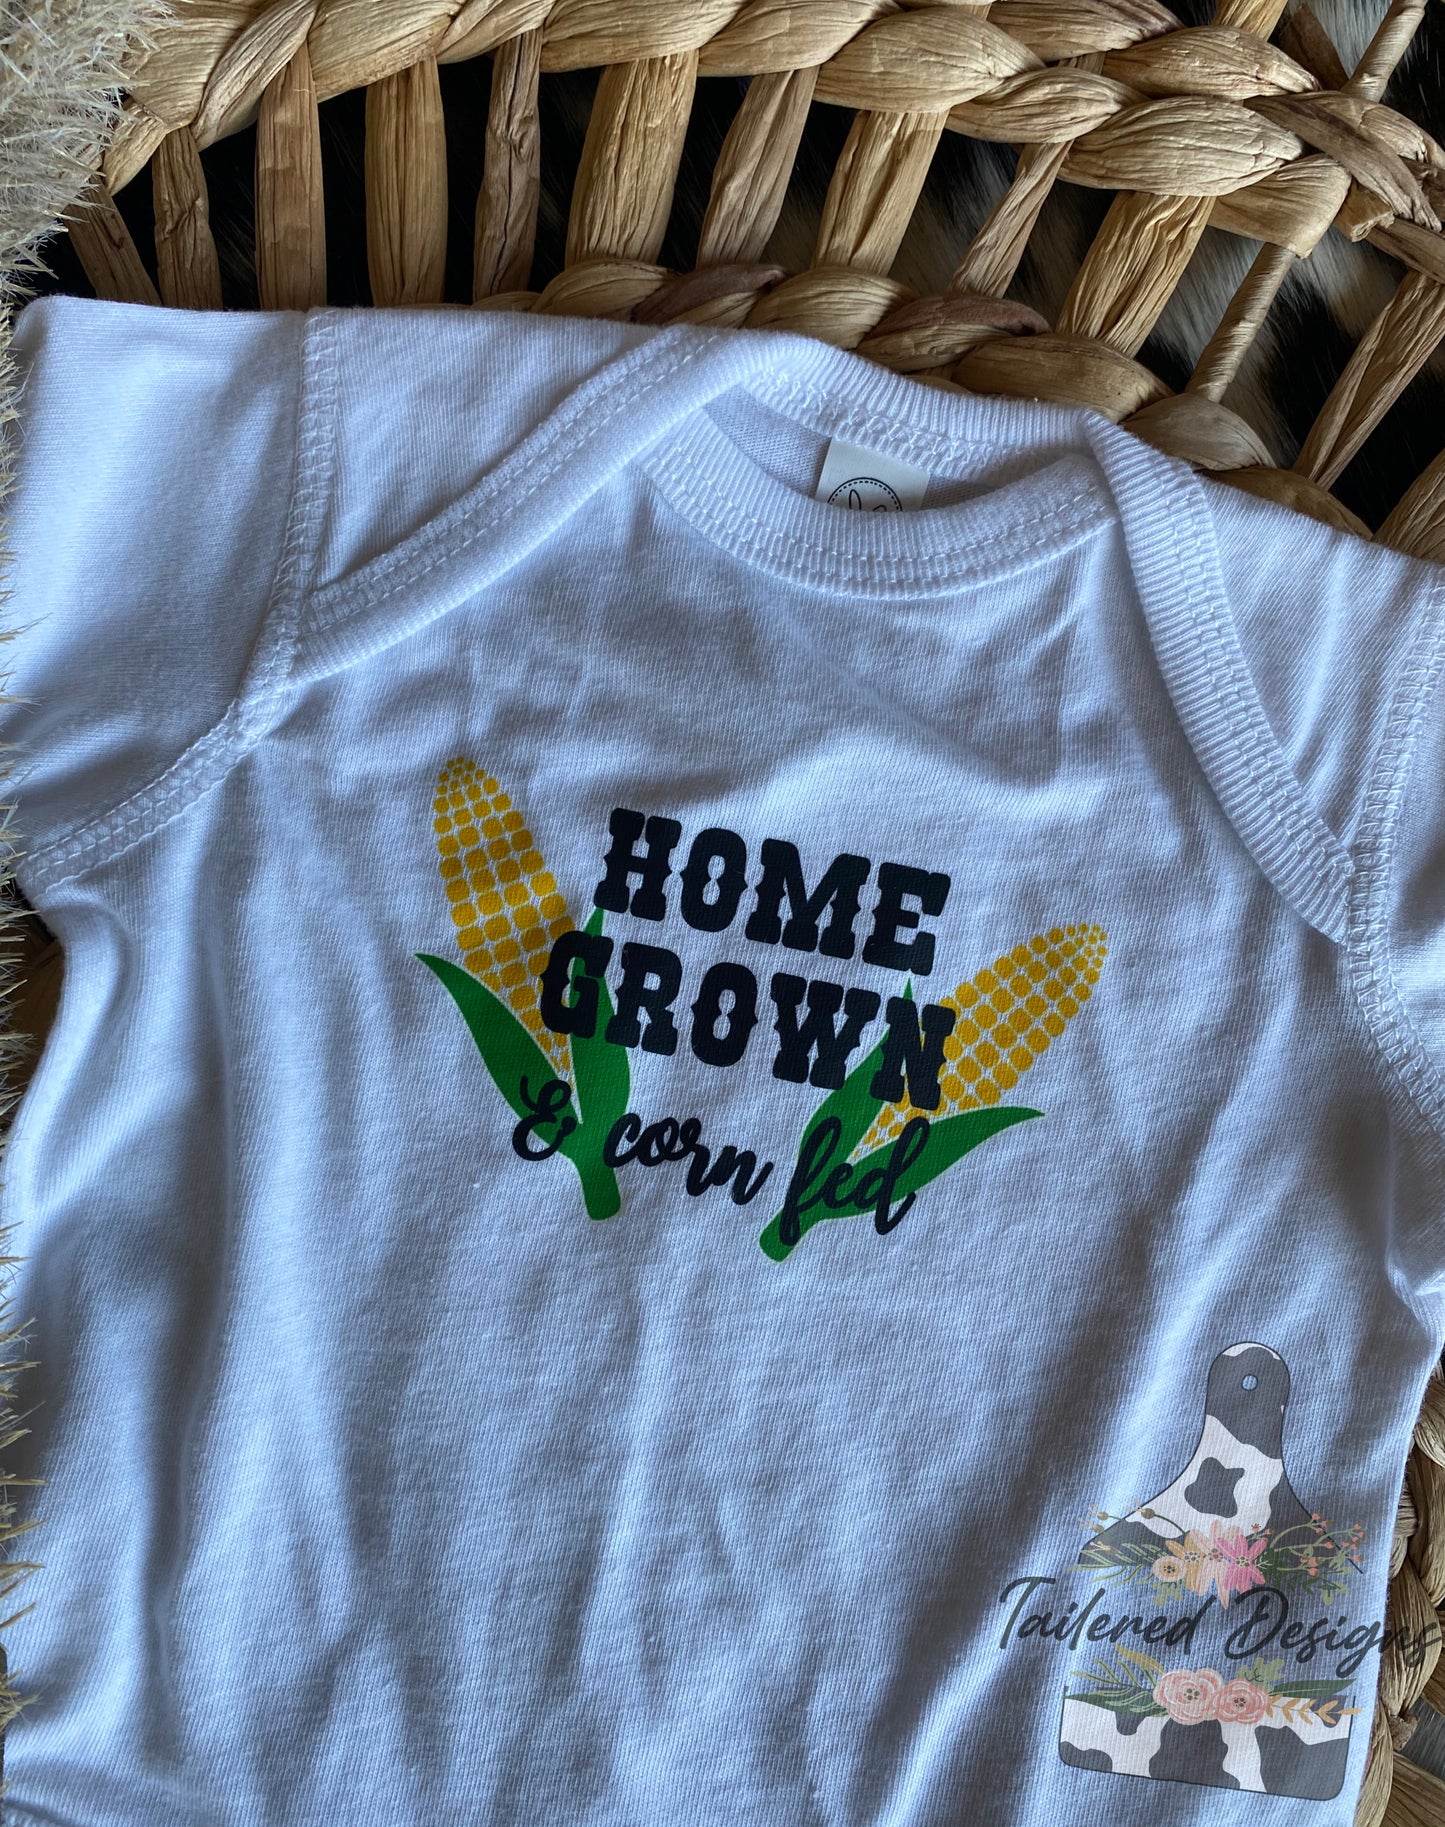 Home Grown & Corn Fed